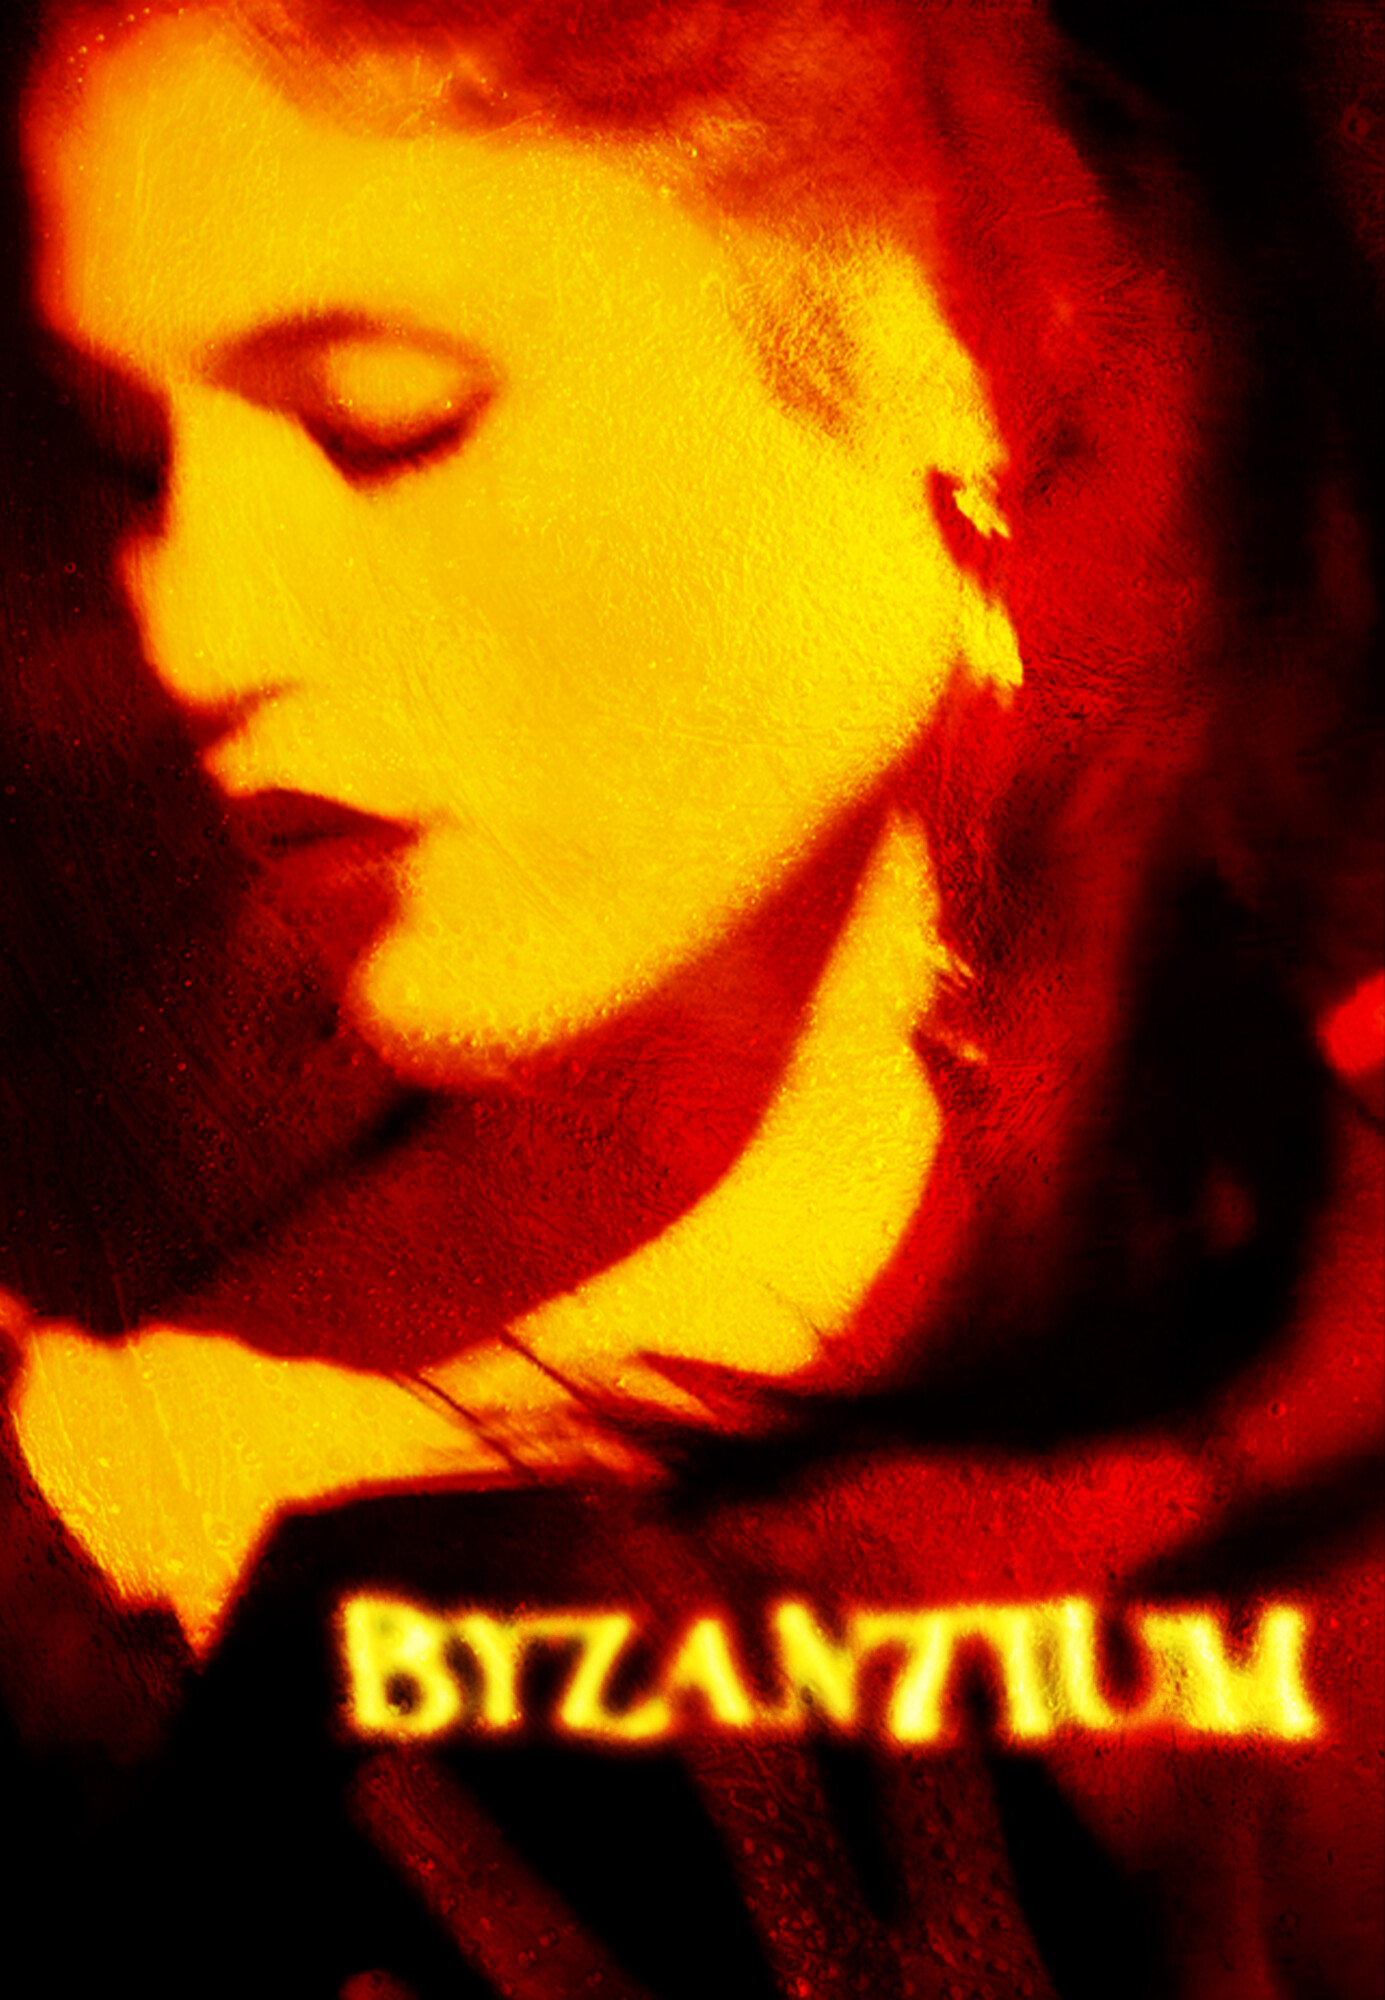 Byzantium Poster